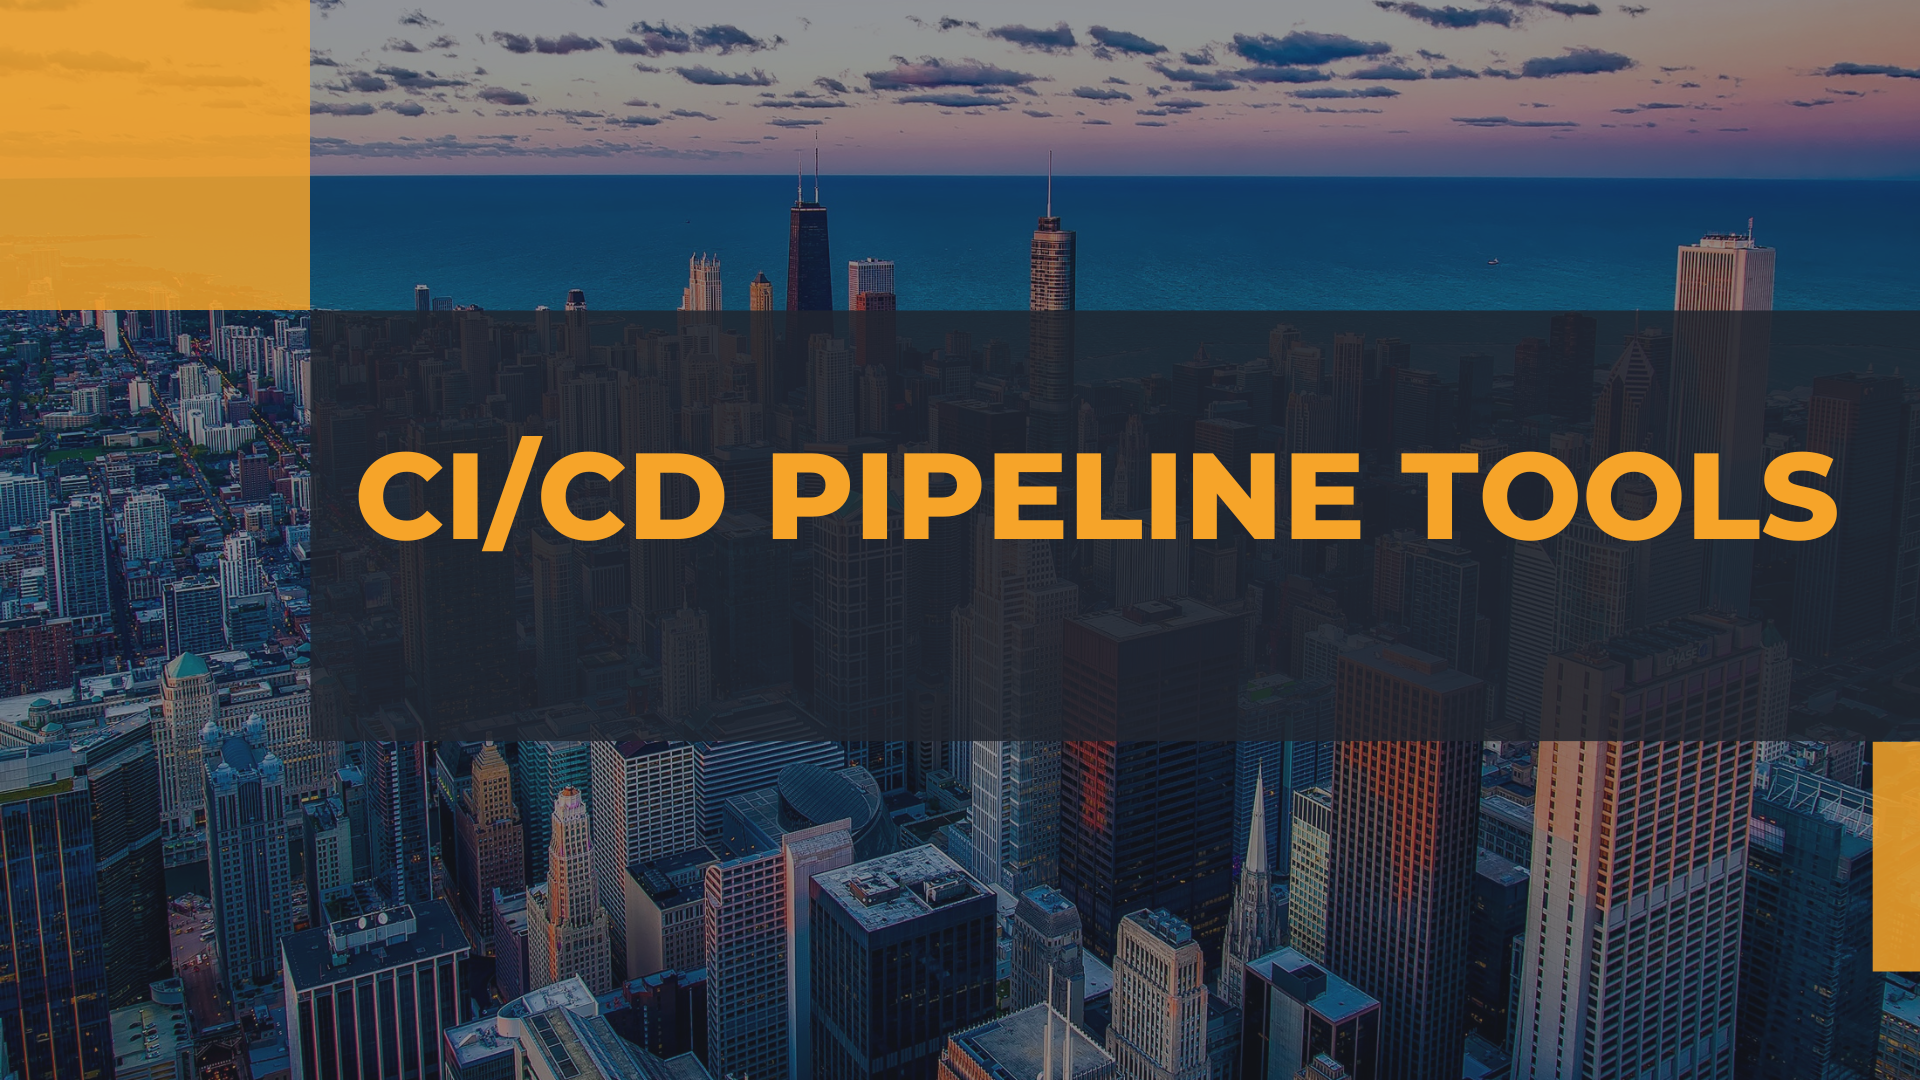 CI/CD Pipeline Tools